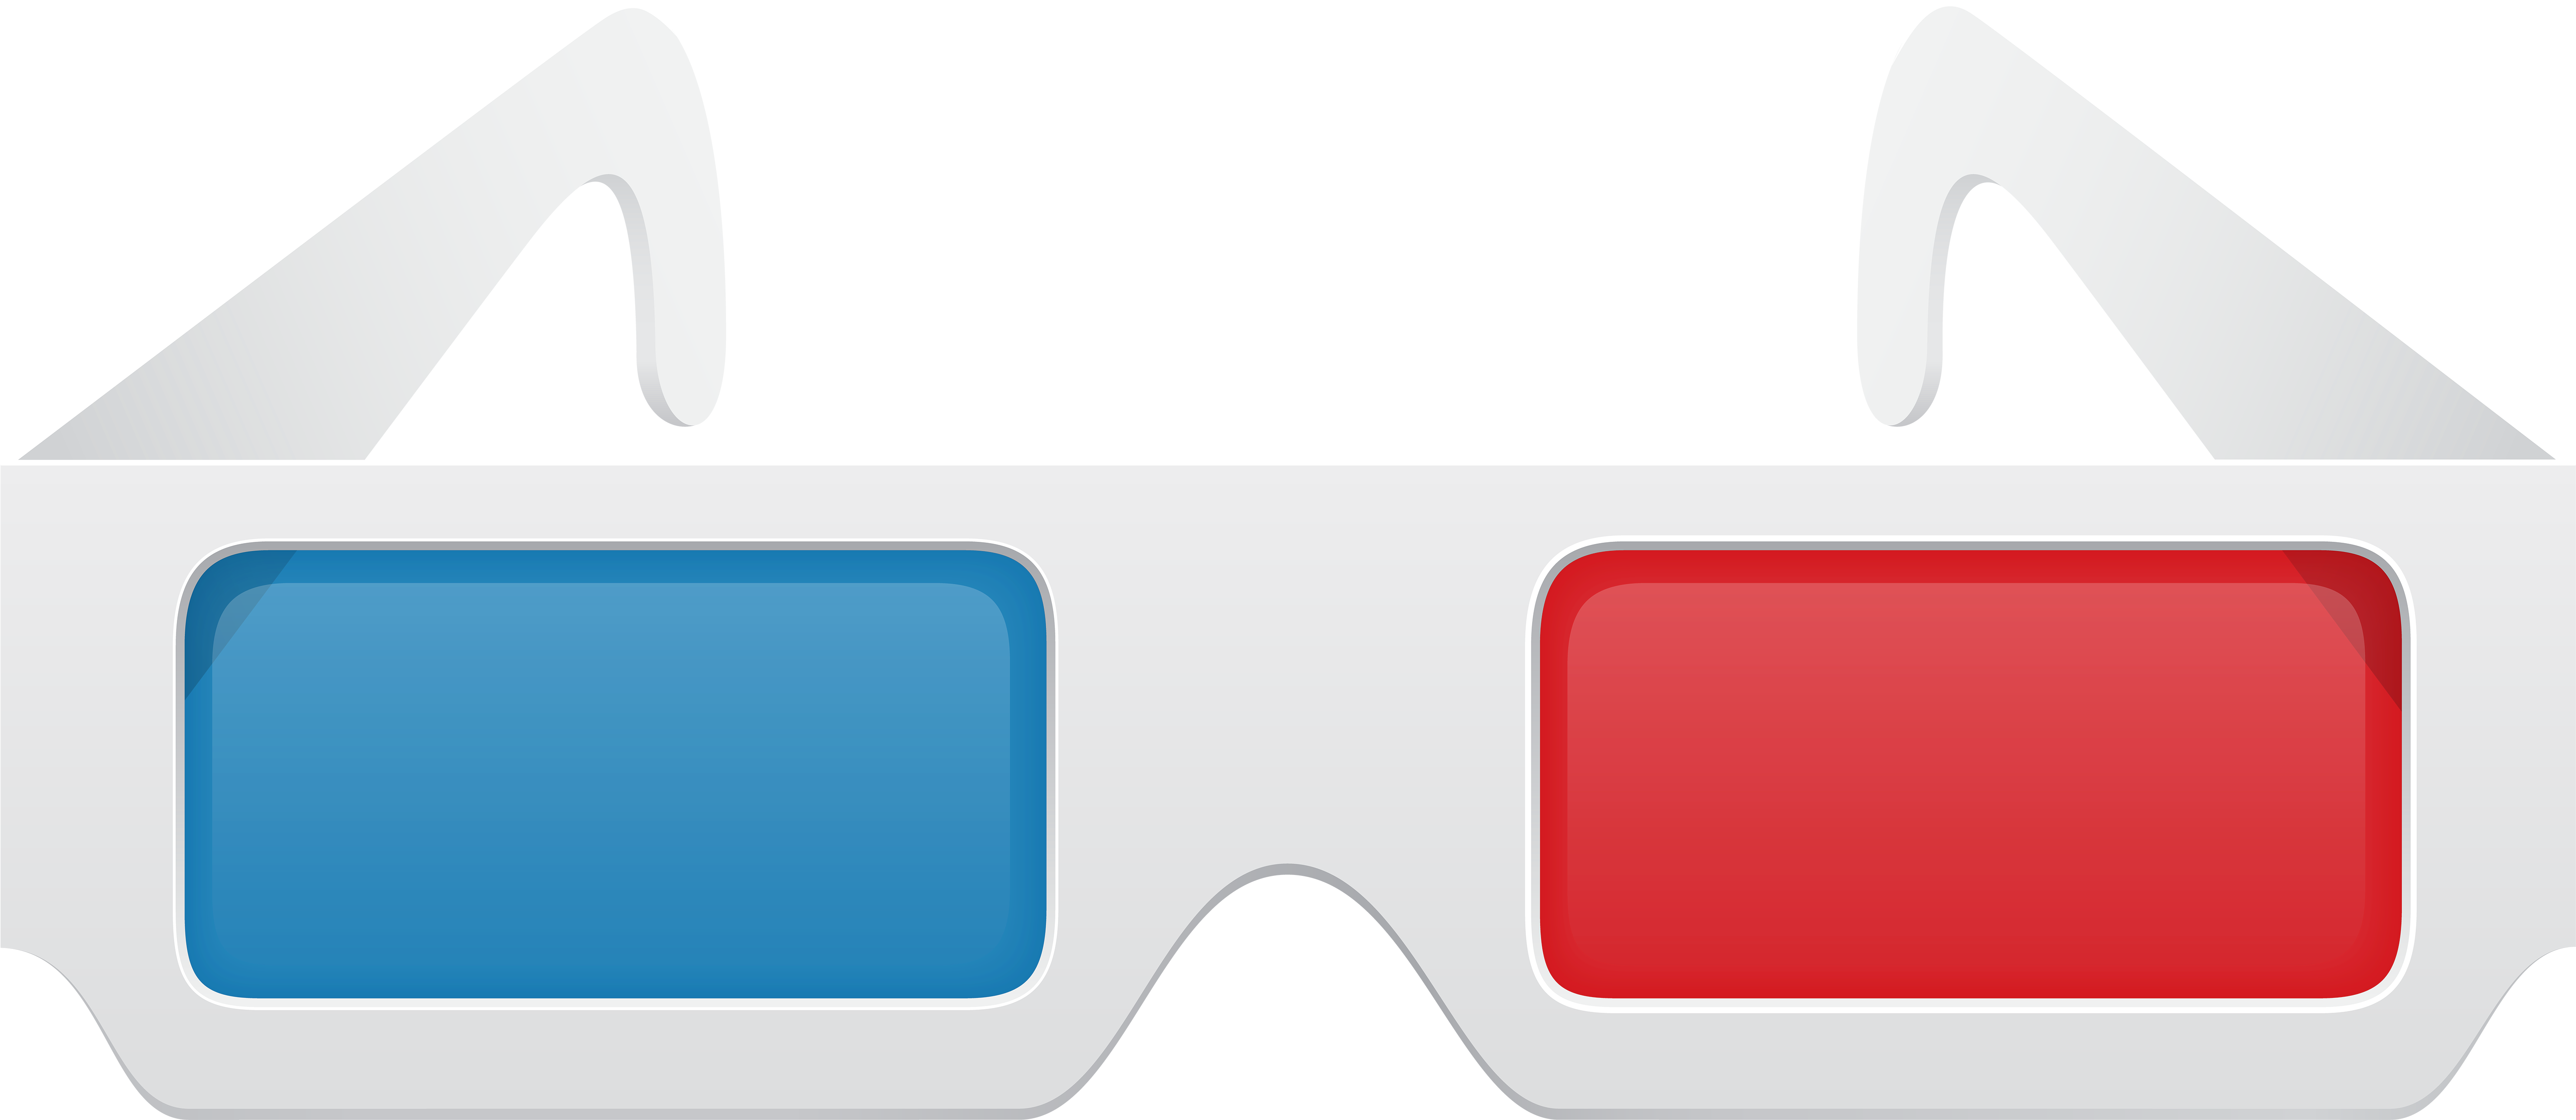 Cinema 3d Glasses Png Clip Art - Transparent Background 3d Glasses -  (6000x2609) Png Clipart Download